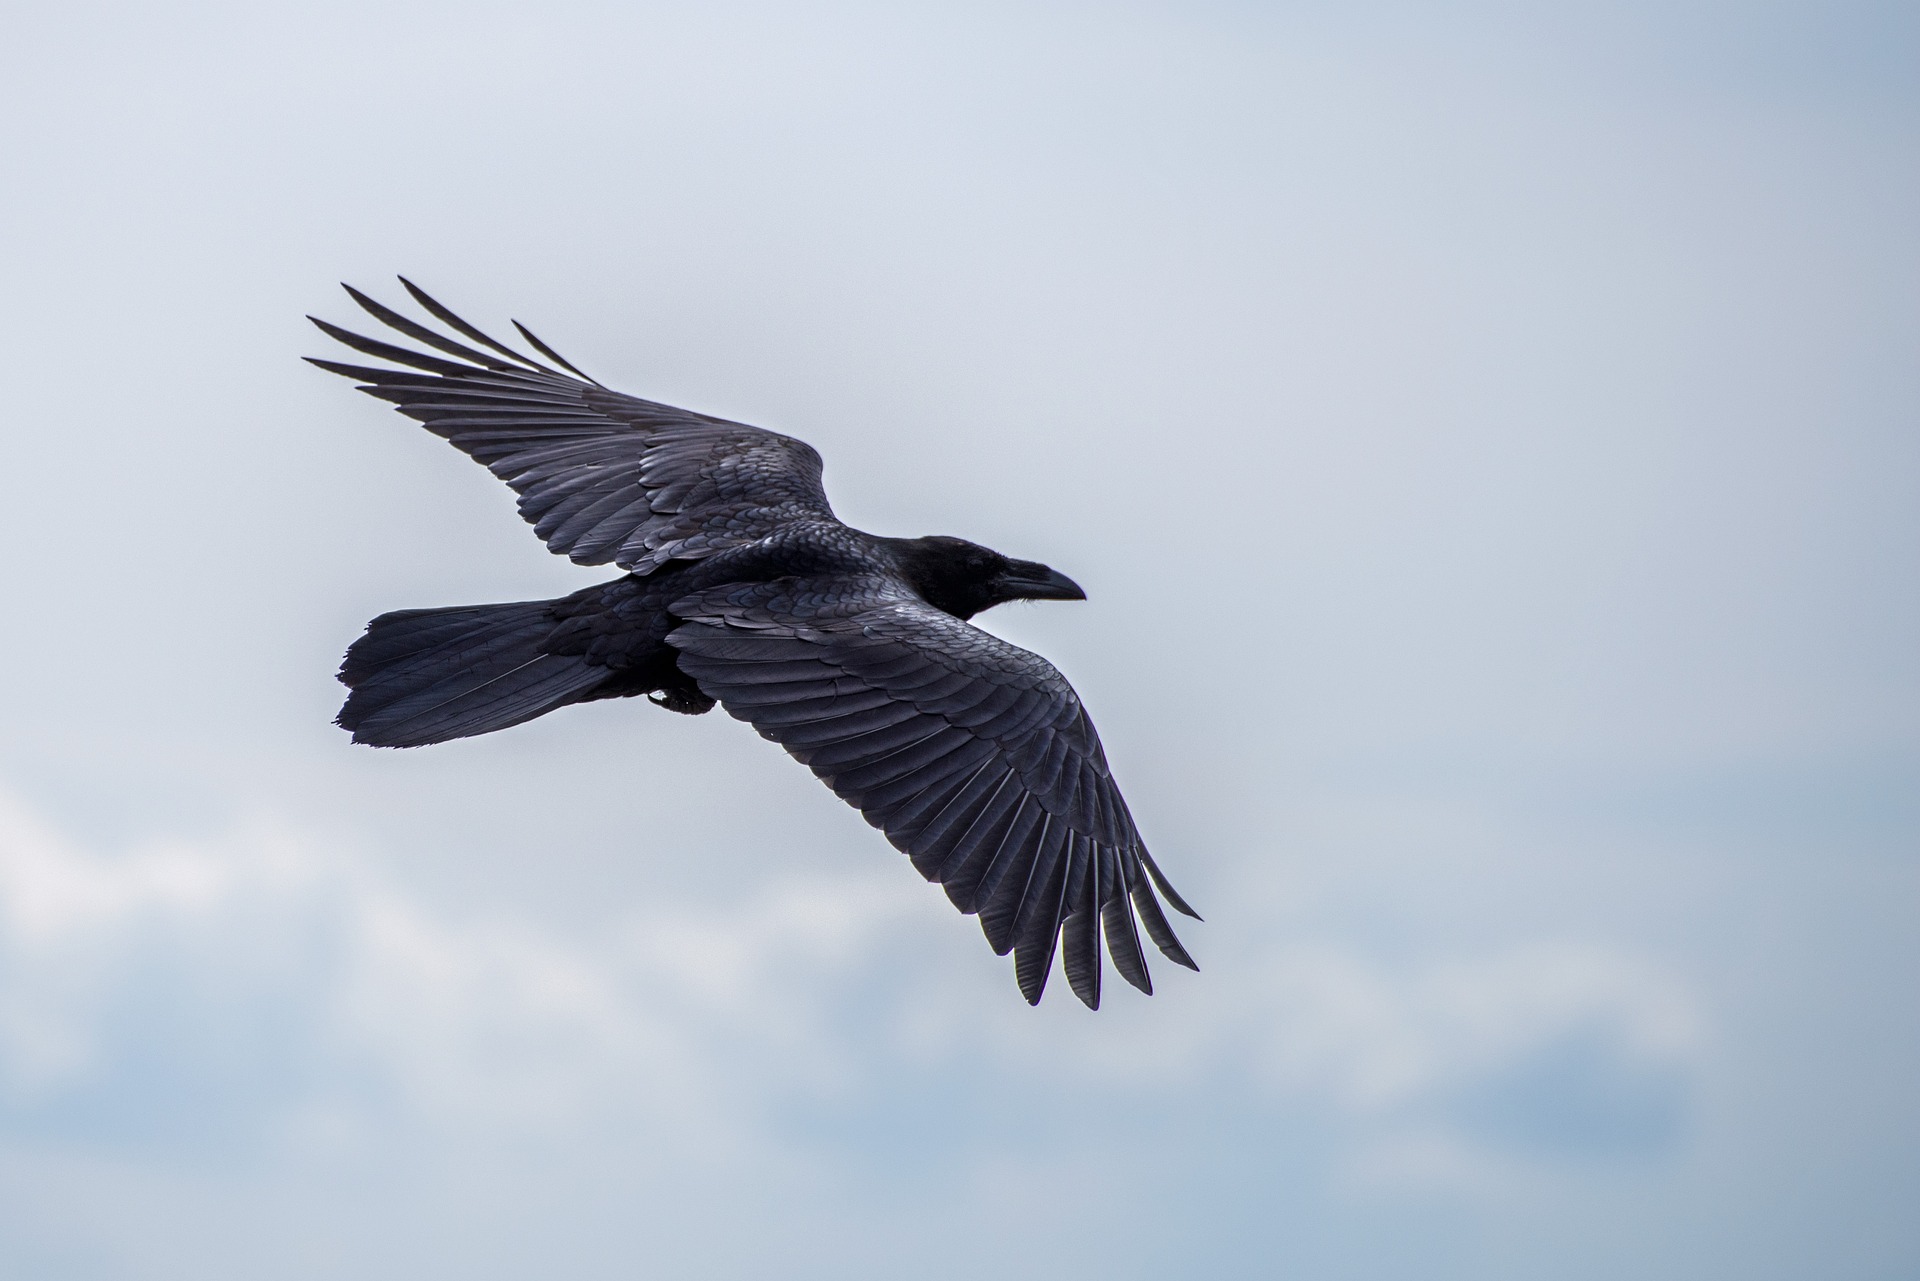 A black crow flying